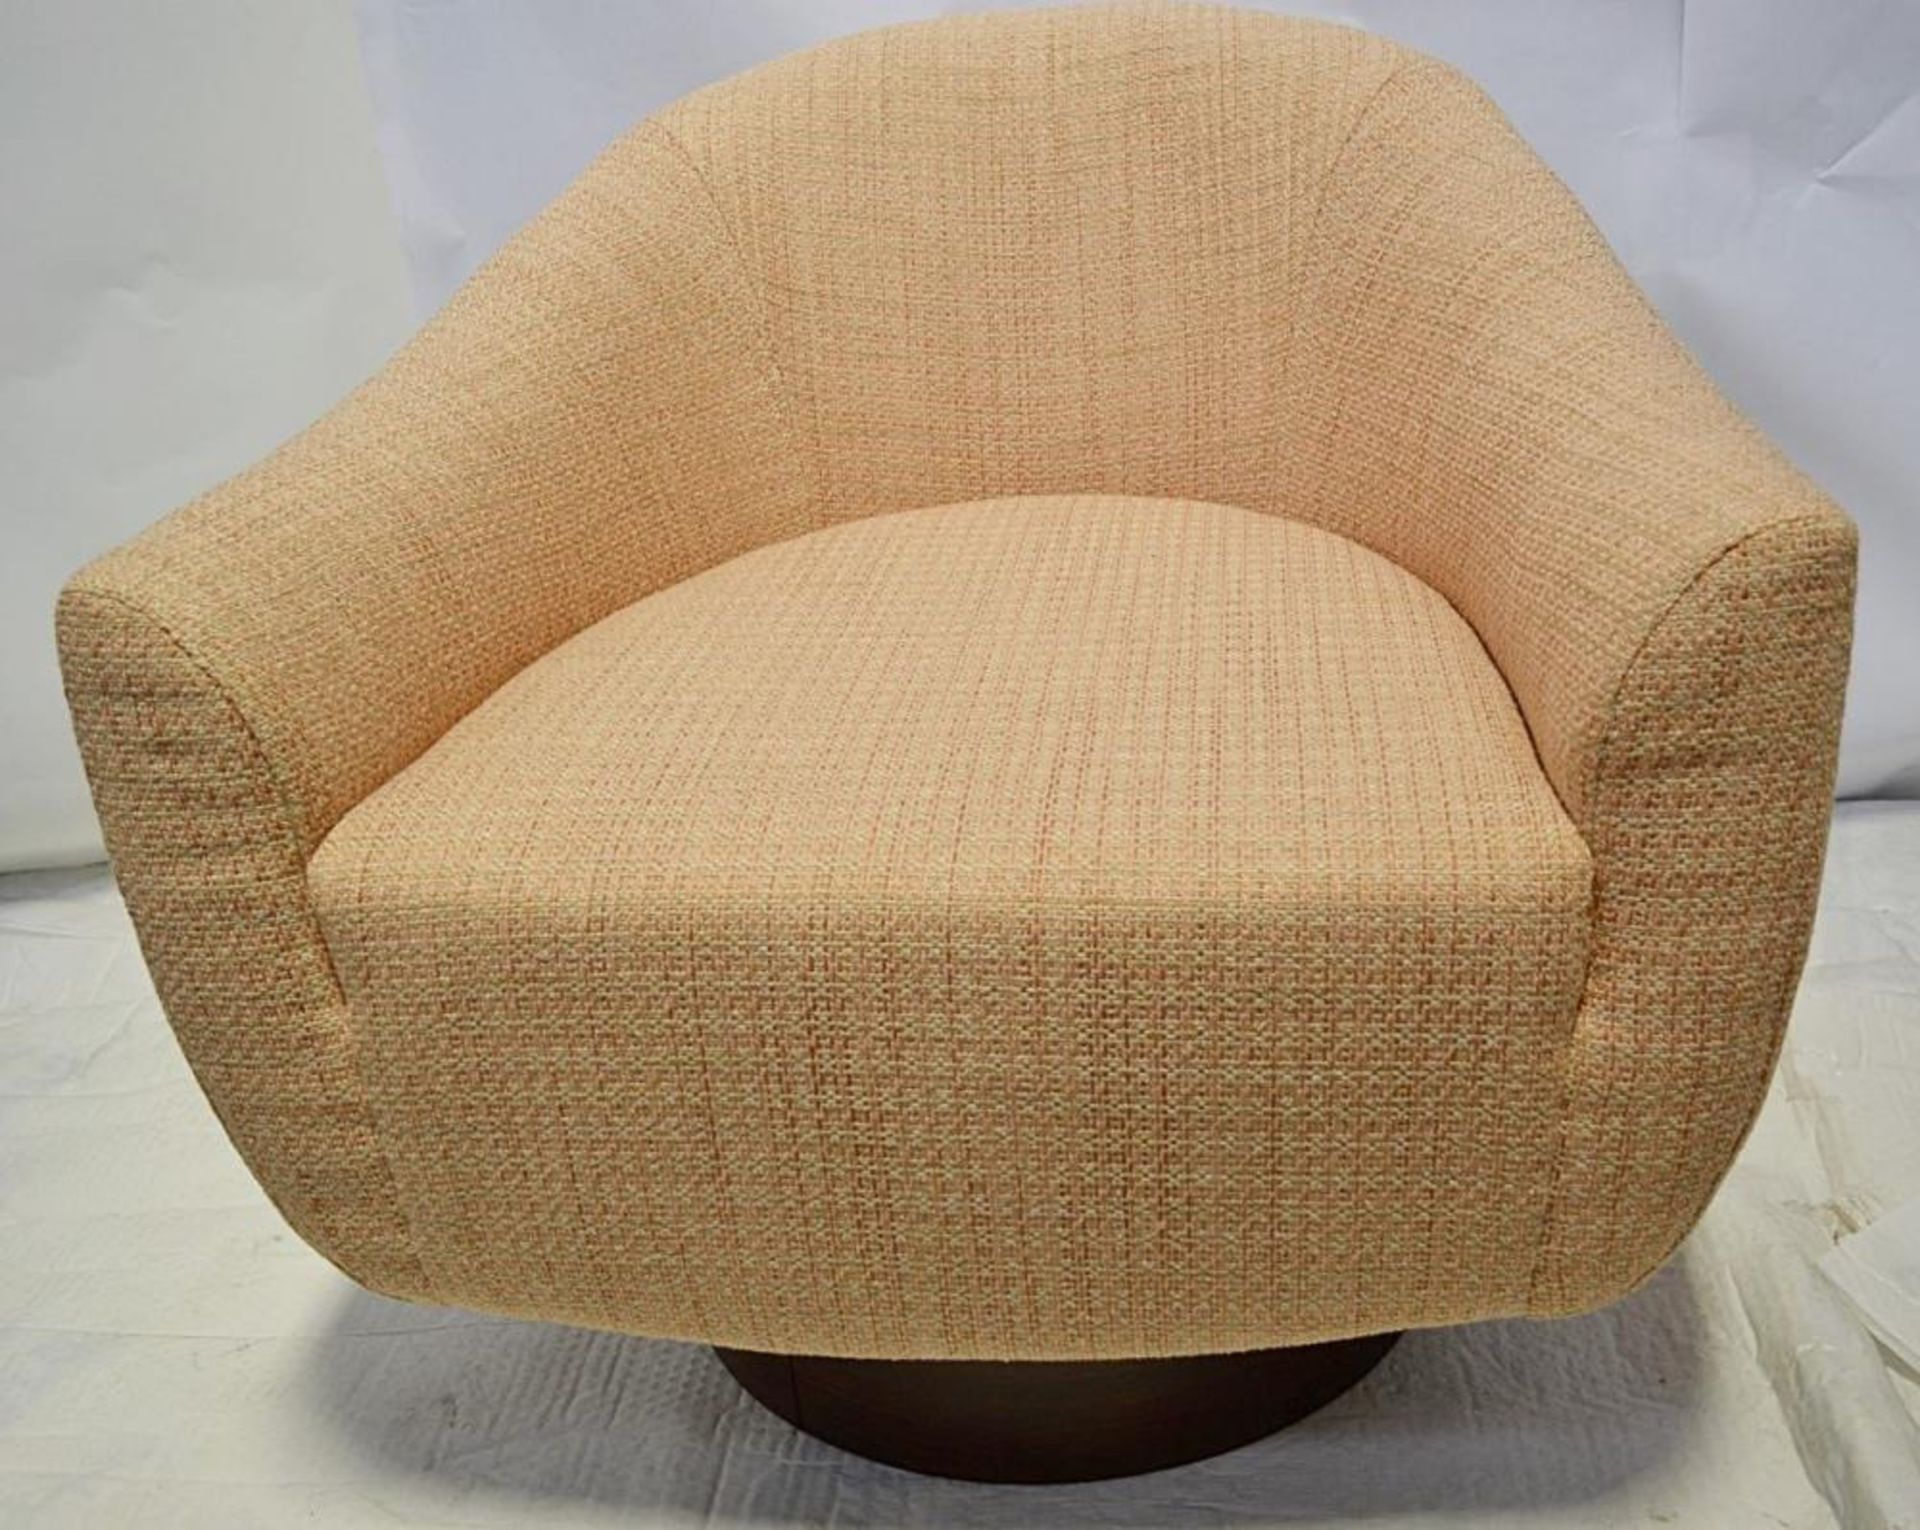 1 x KELLY WEARSTLER Sonara Swivel Chair Rosewood - Dimensions: 31” W x 35” D x 31” H - Ex-Display In - Image 7 of 28